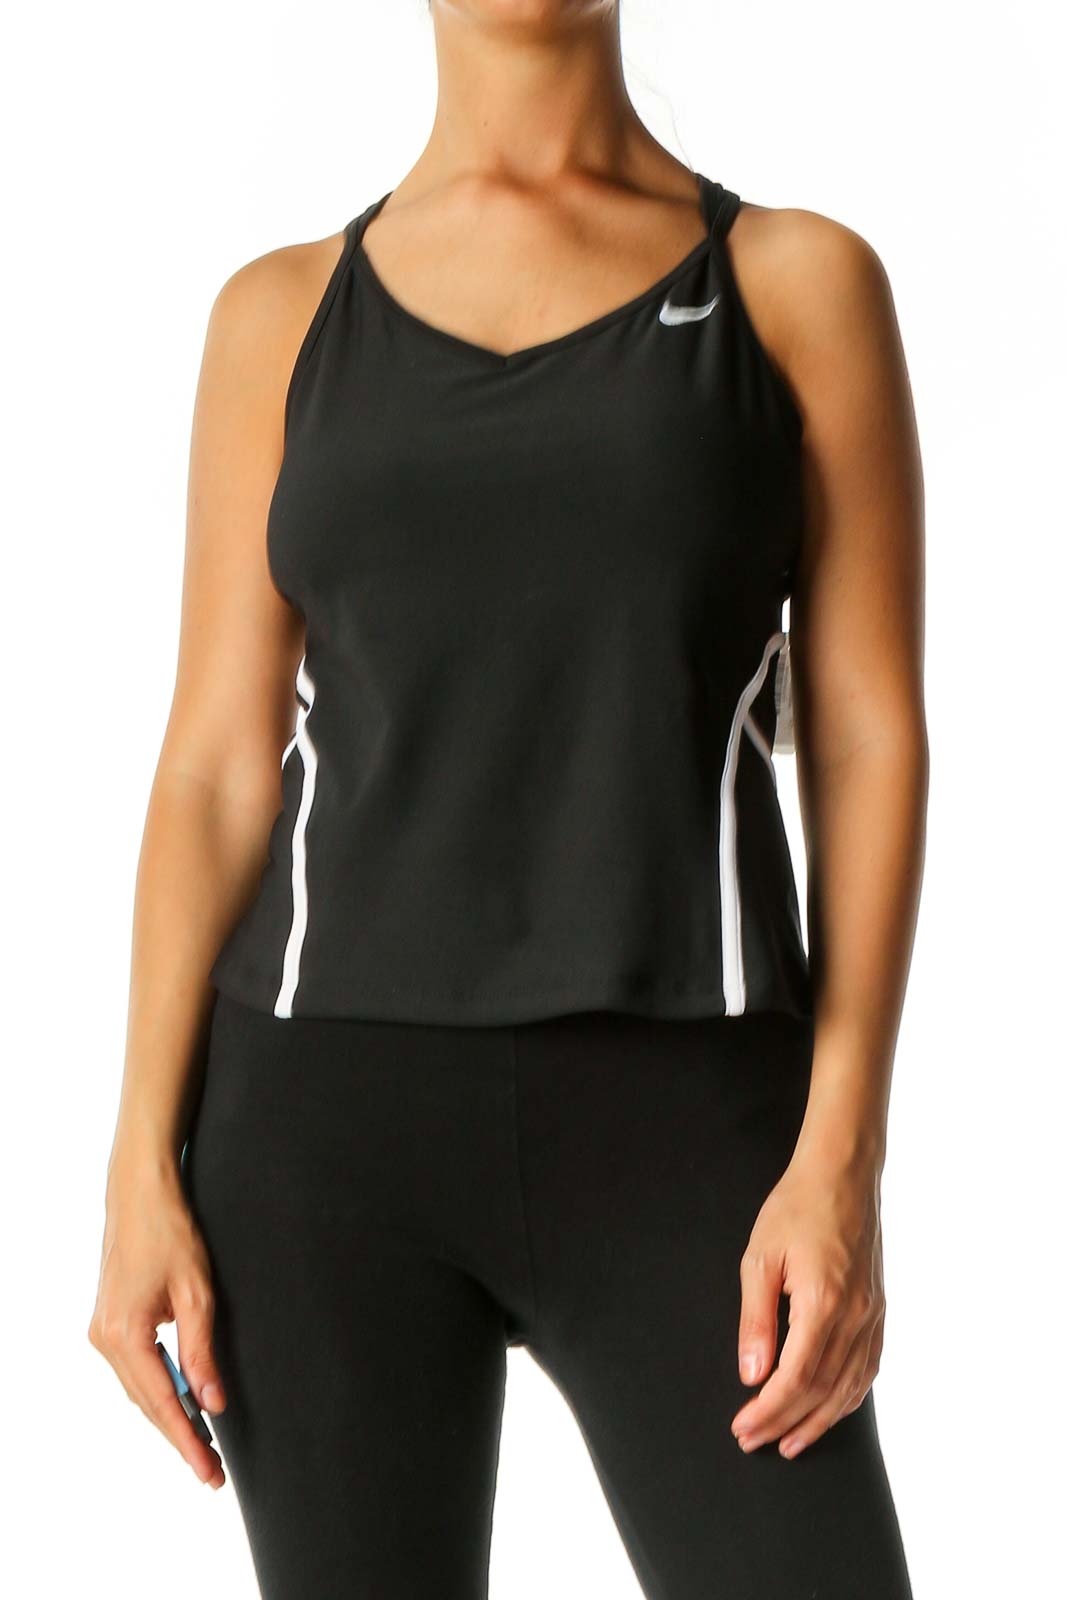 Nike - Black Solid Activewear Tank Top Polyester Spandex Nylon | SilkRoll